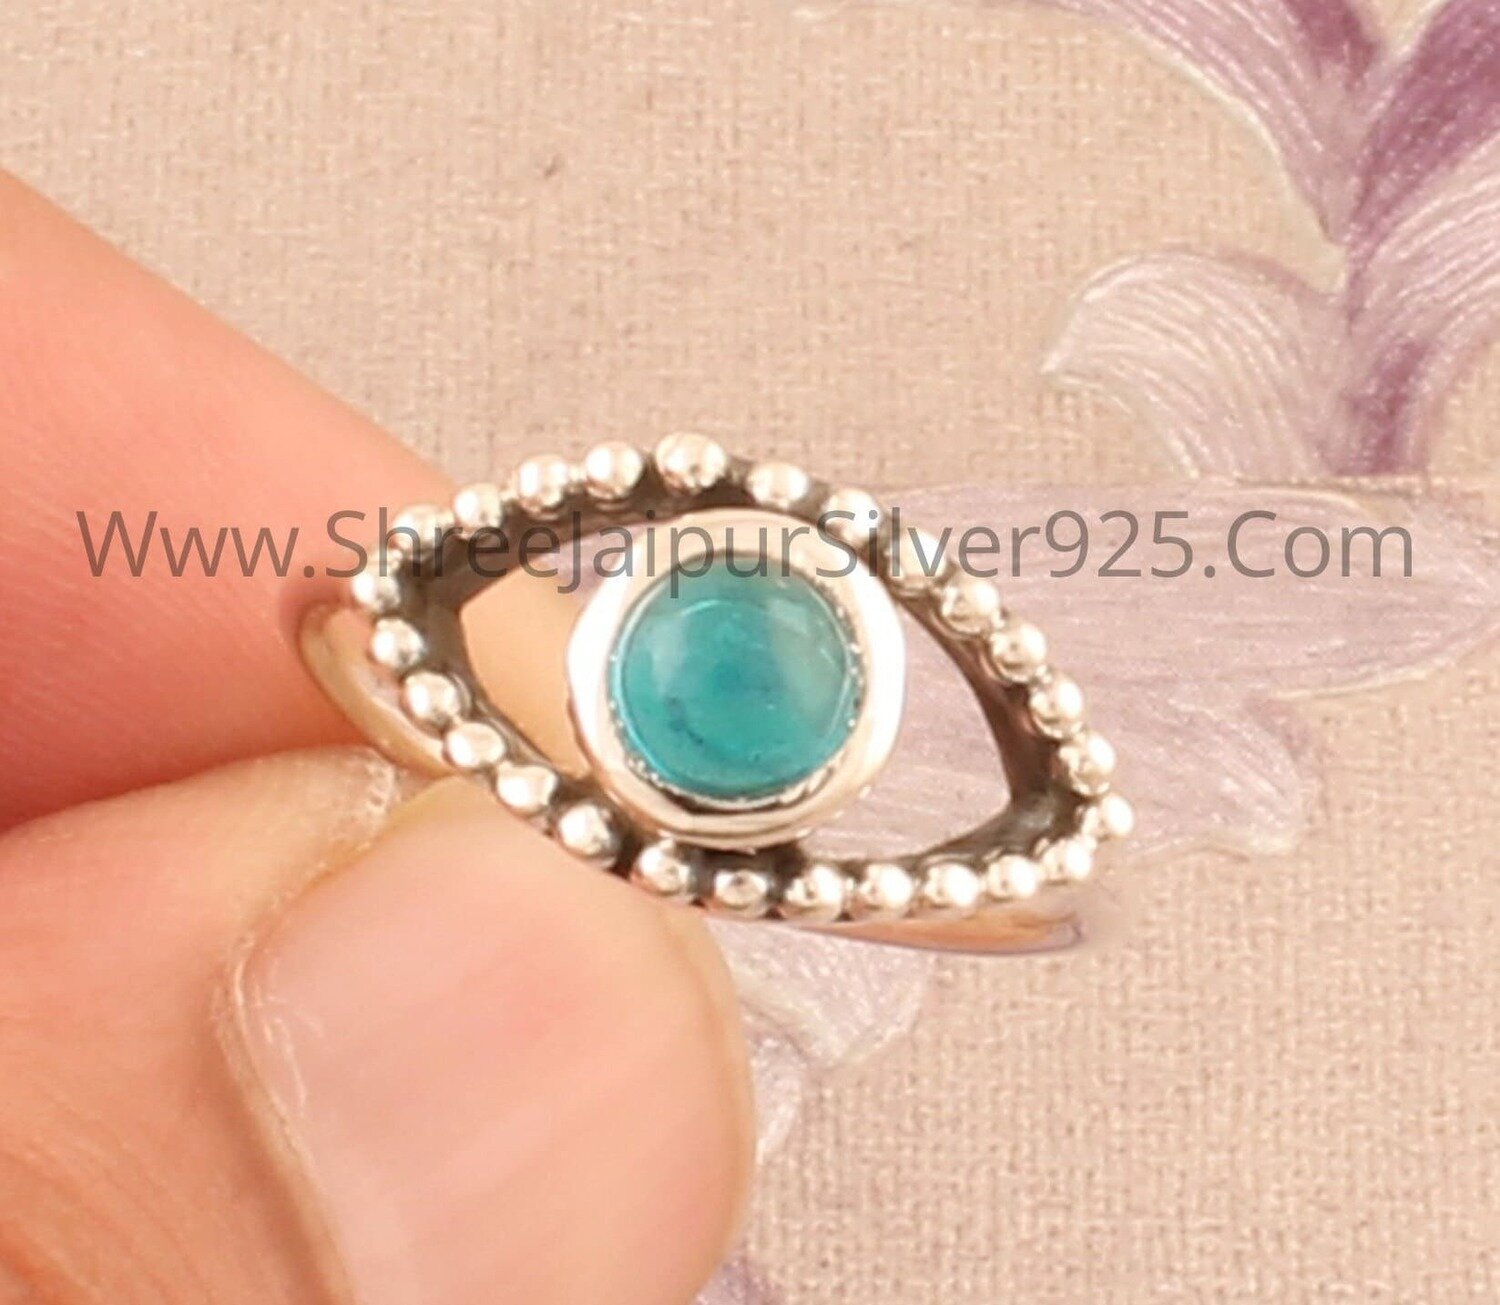 Apatite Blue Topaz Quartz Ring, 925 Sterling Silver Evil Eye Ring, Evil Eye Ring, Round Gemstone Ring, Designer Handmade Jewelry Gift Idea